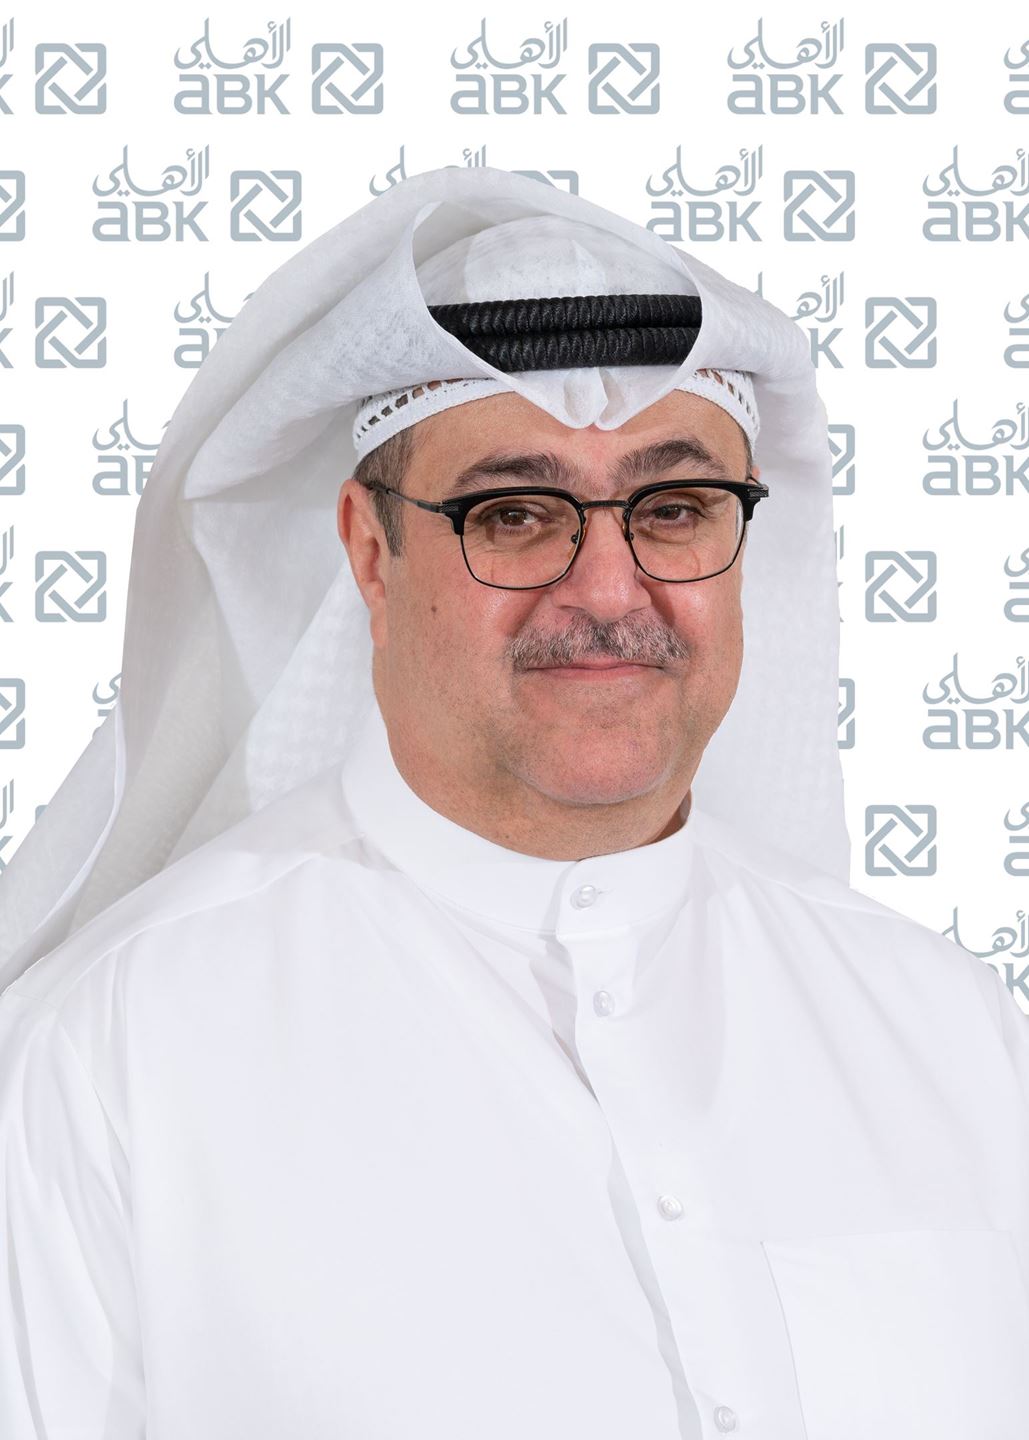 Mr. Loai Muqames, Chief Executive Officer of ABK – Kuwait